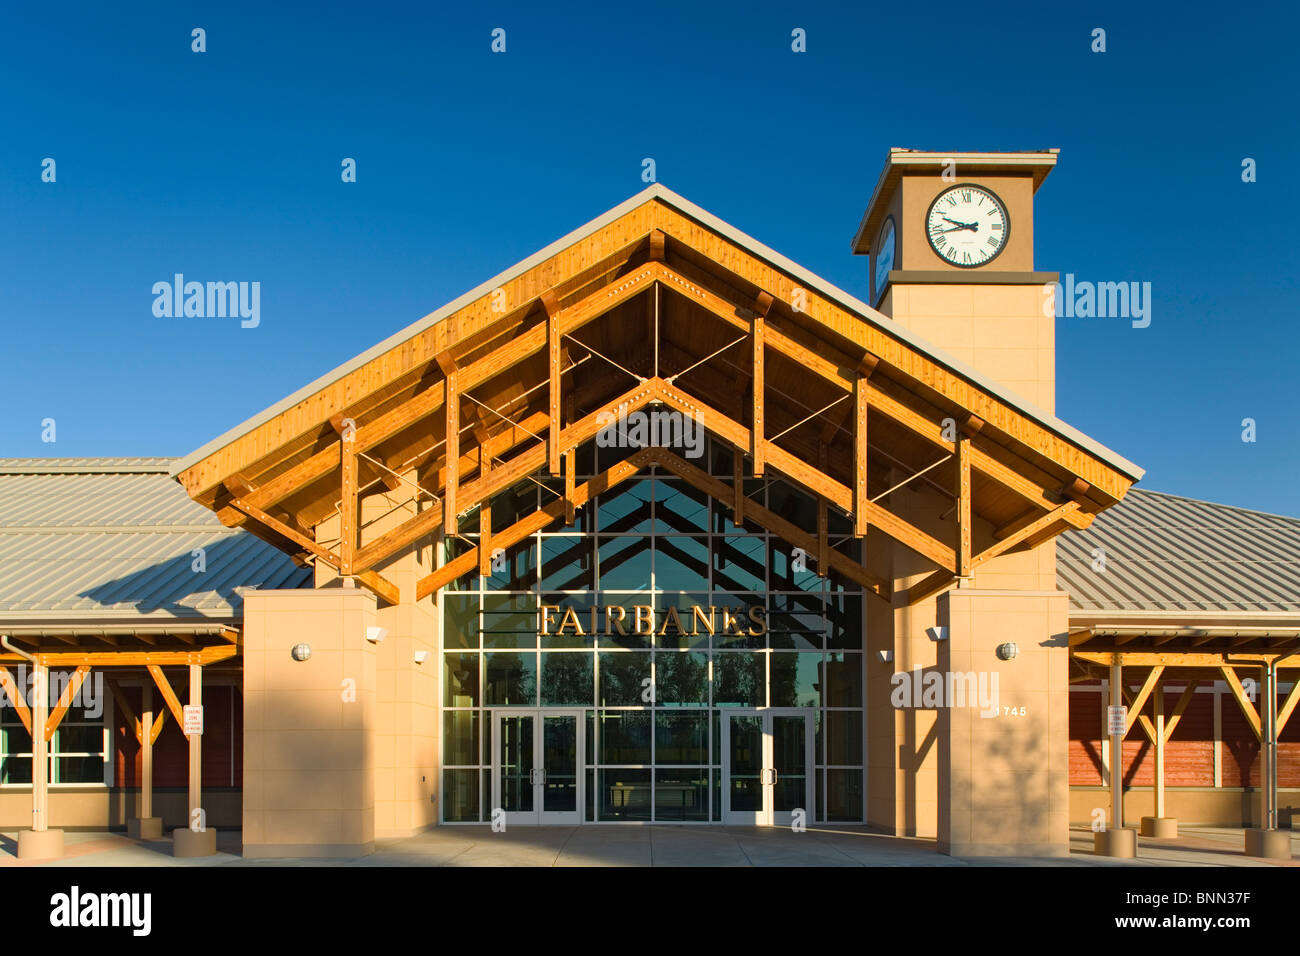 The Alaska Railroad terminal building in Fairbanks, Alaska during Summer Stock Photo